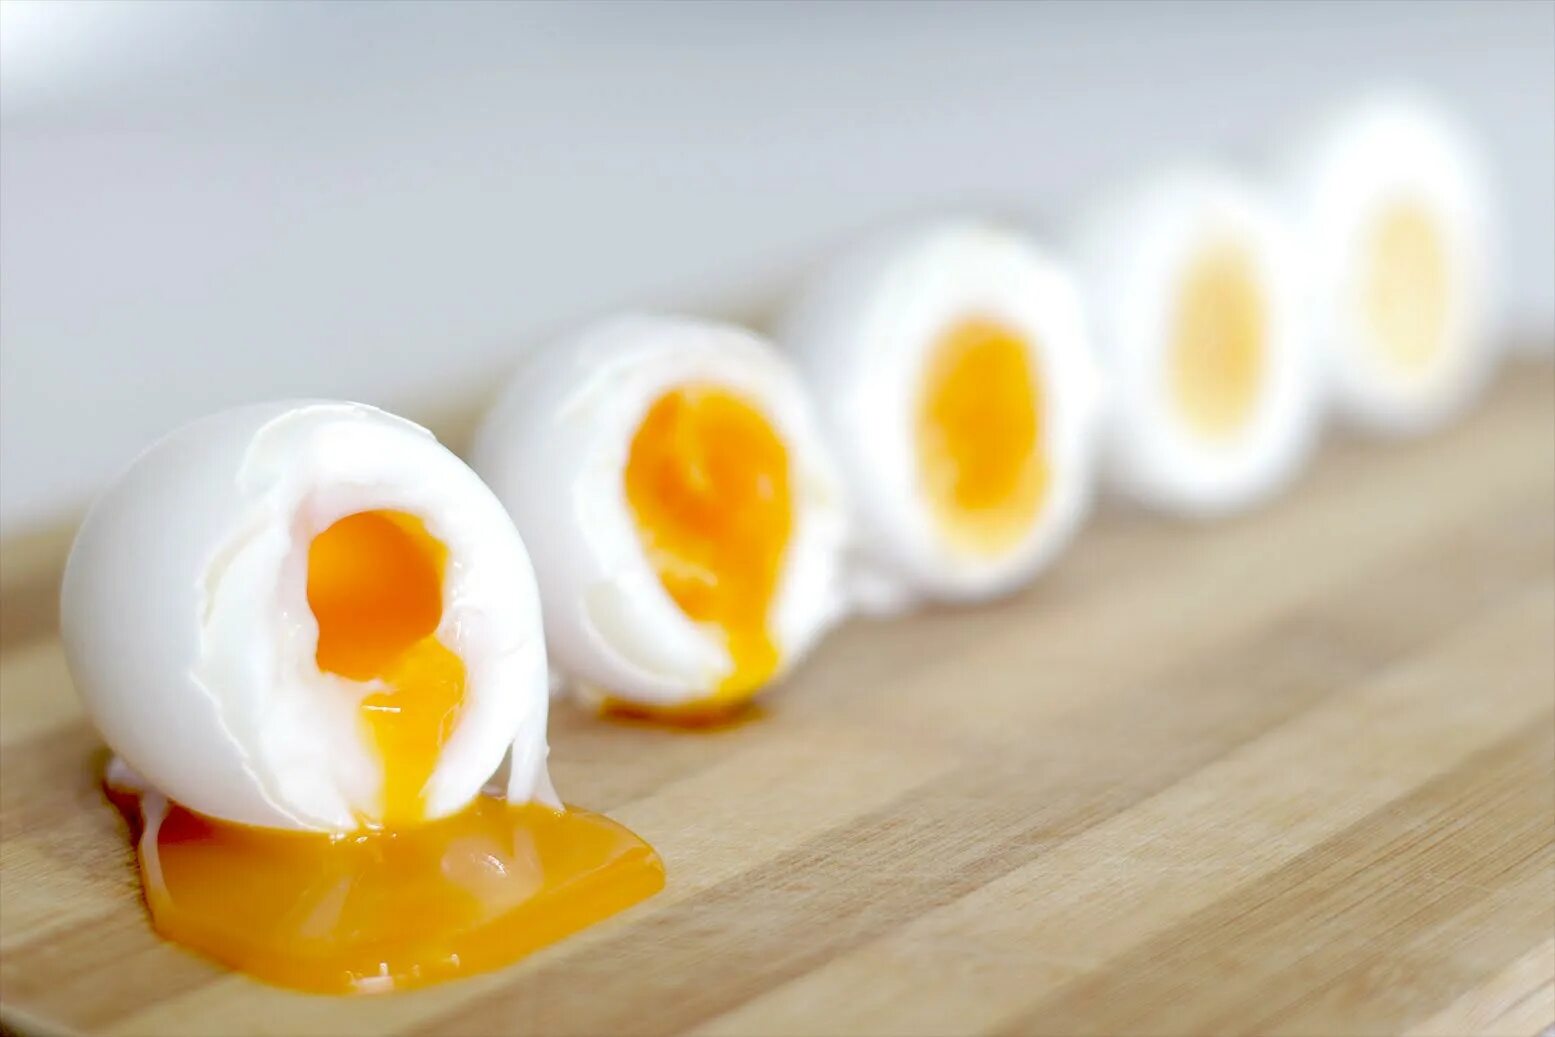 Cooked egg. Яйцо вареное всмятку. Яйцо всмятку яйца вкрутую. Яйца куриные вареные всмятку. Перепелиные яйца всмятку.